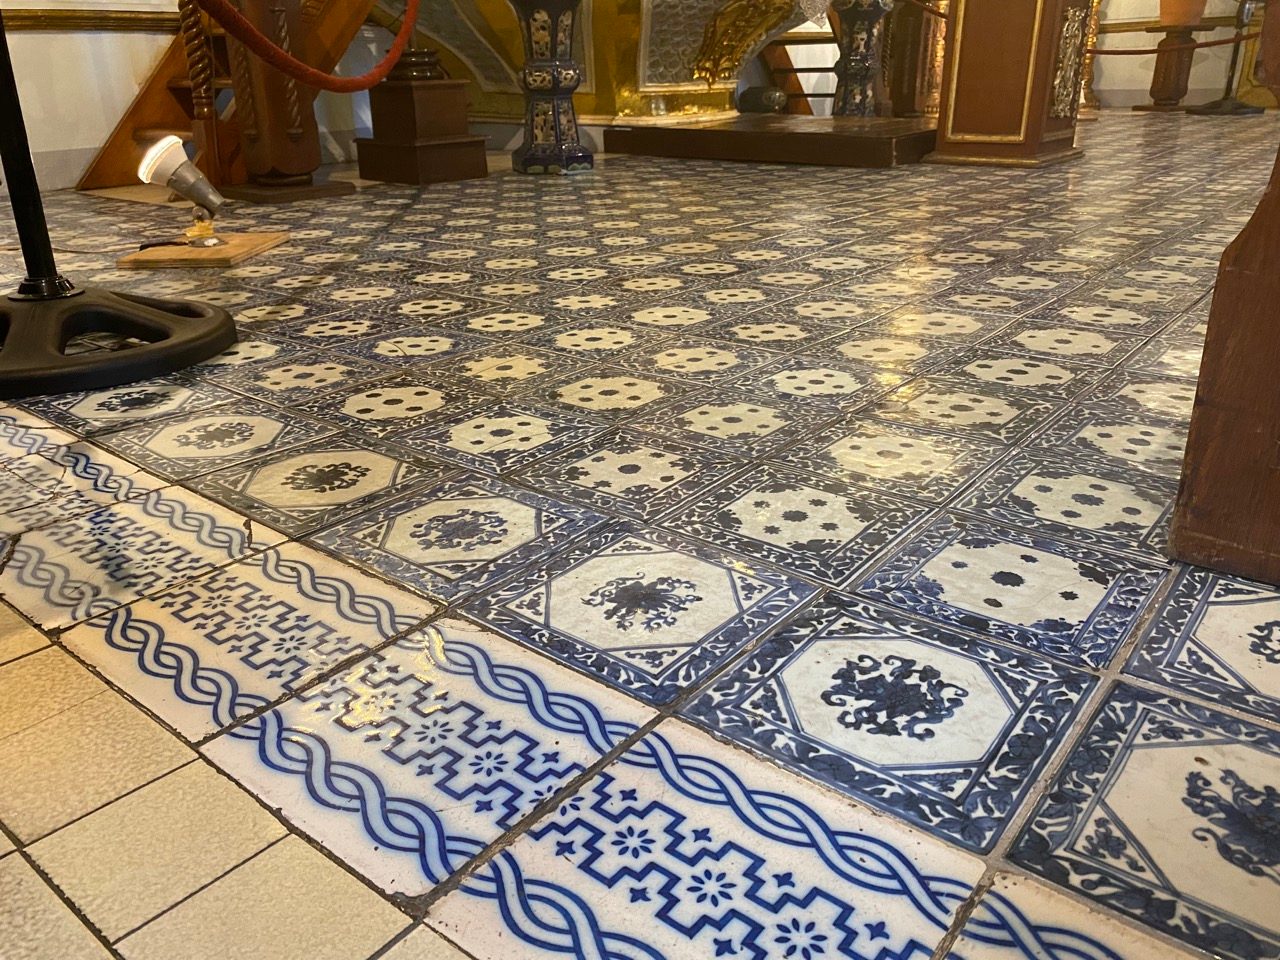 Floor, Flooring, Tile